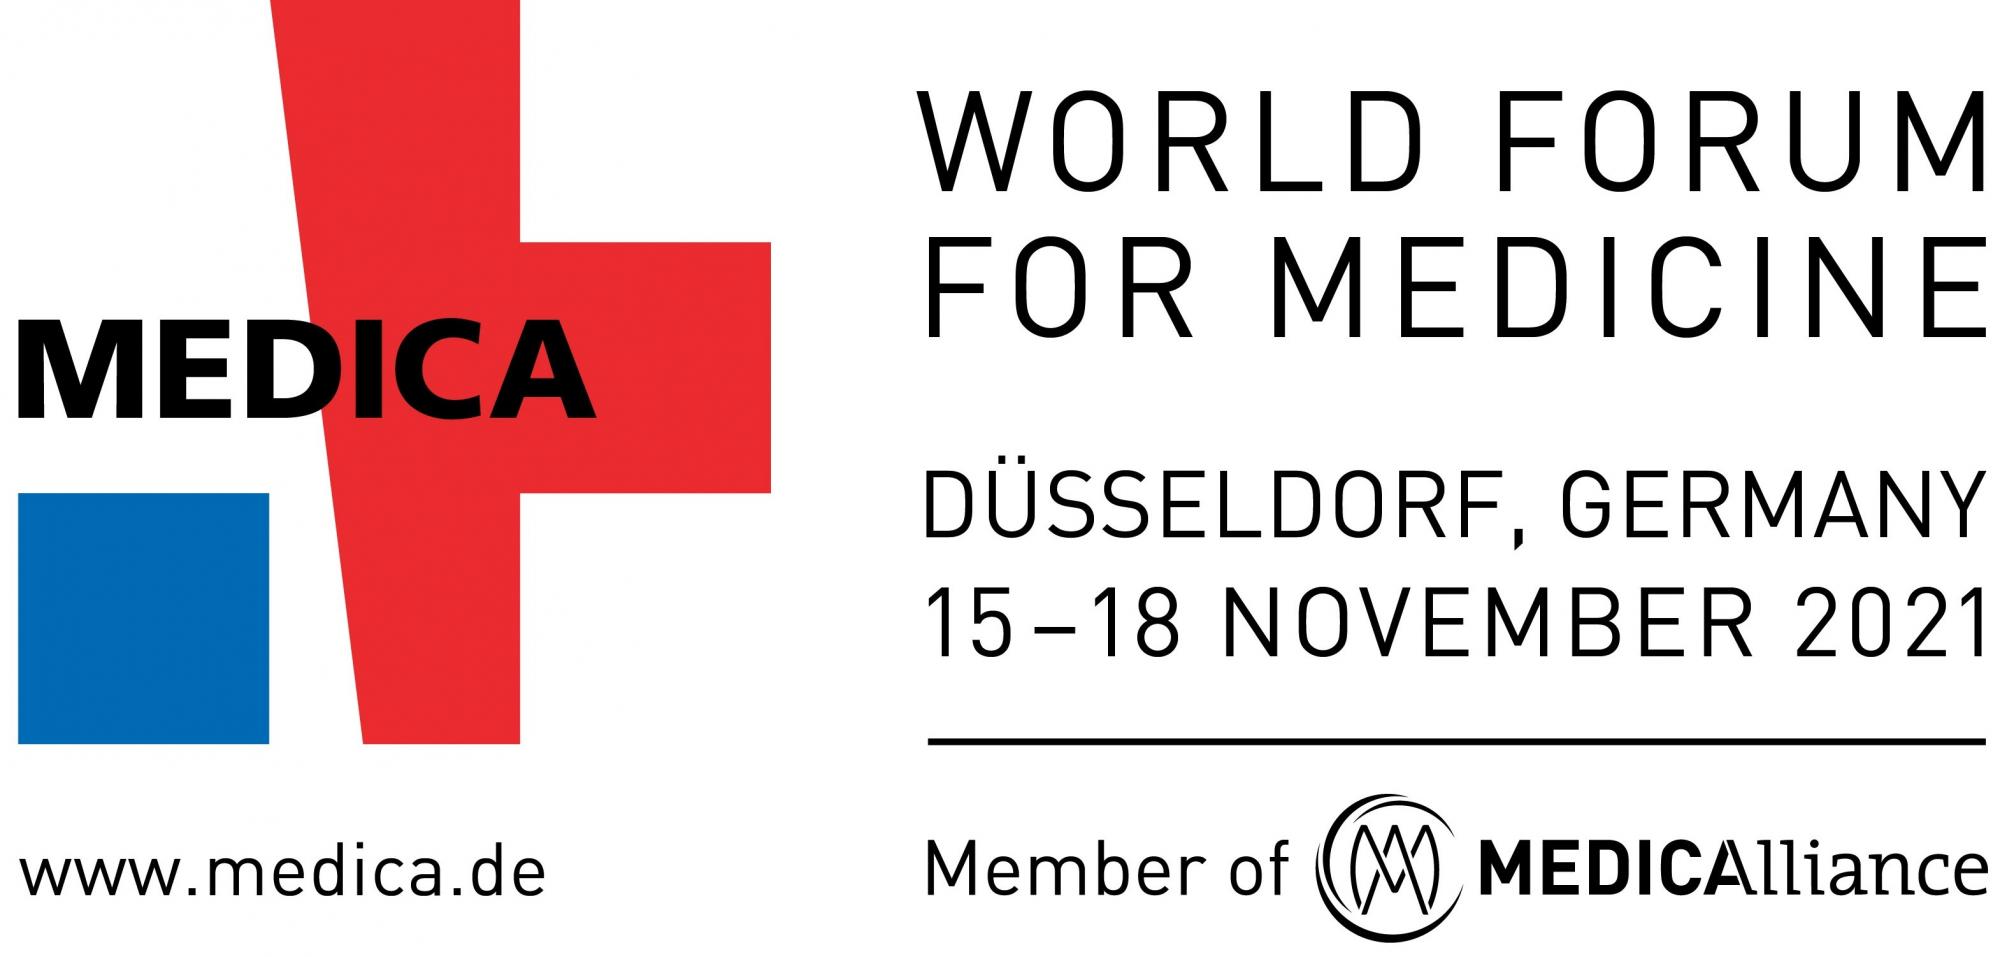 Meet Alerta Medical at Medica Dusseldorf